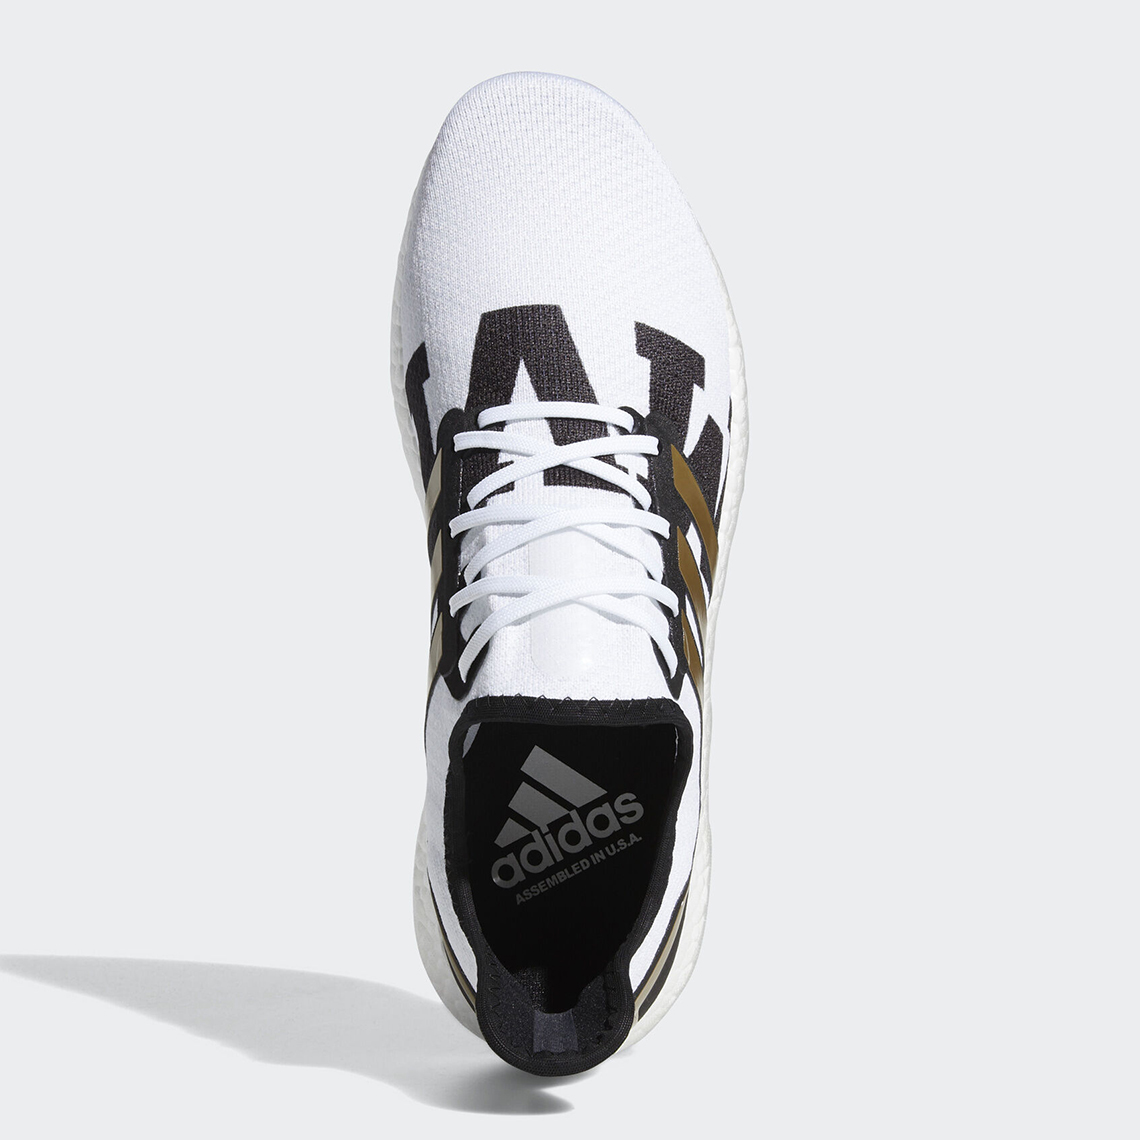 Adidas Am4 Showtime Pat Mahomes Fx9122 Release Date Sneakernews Com